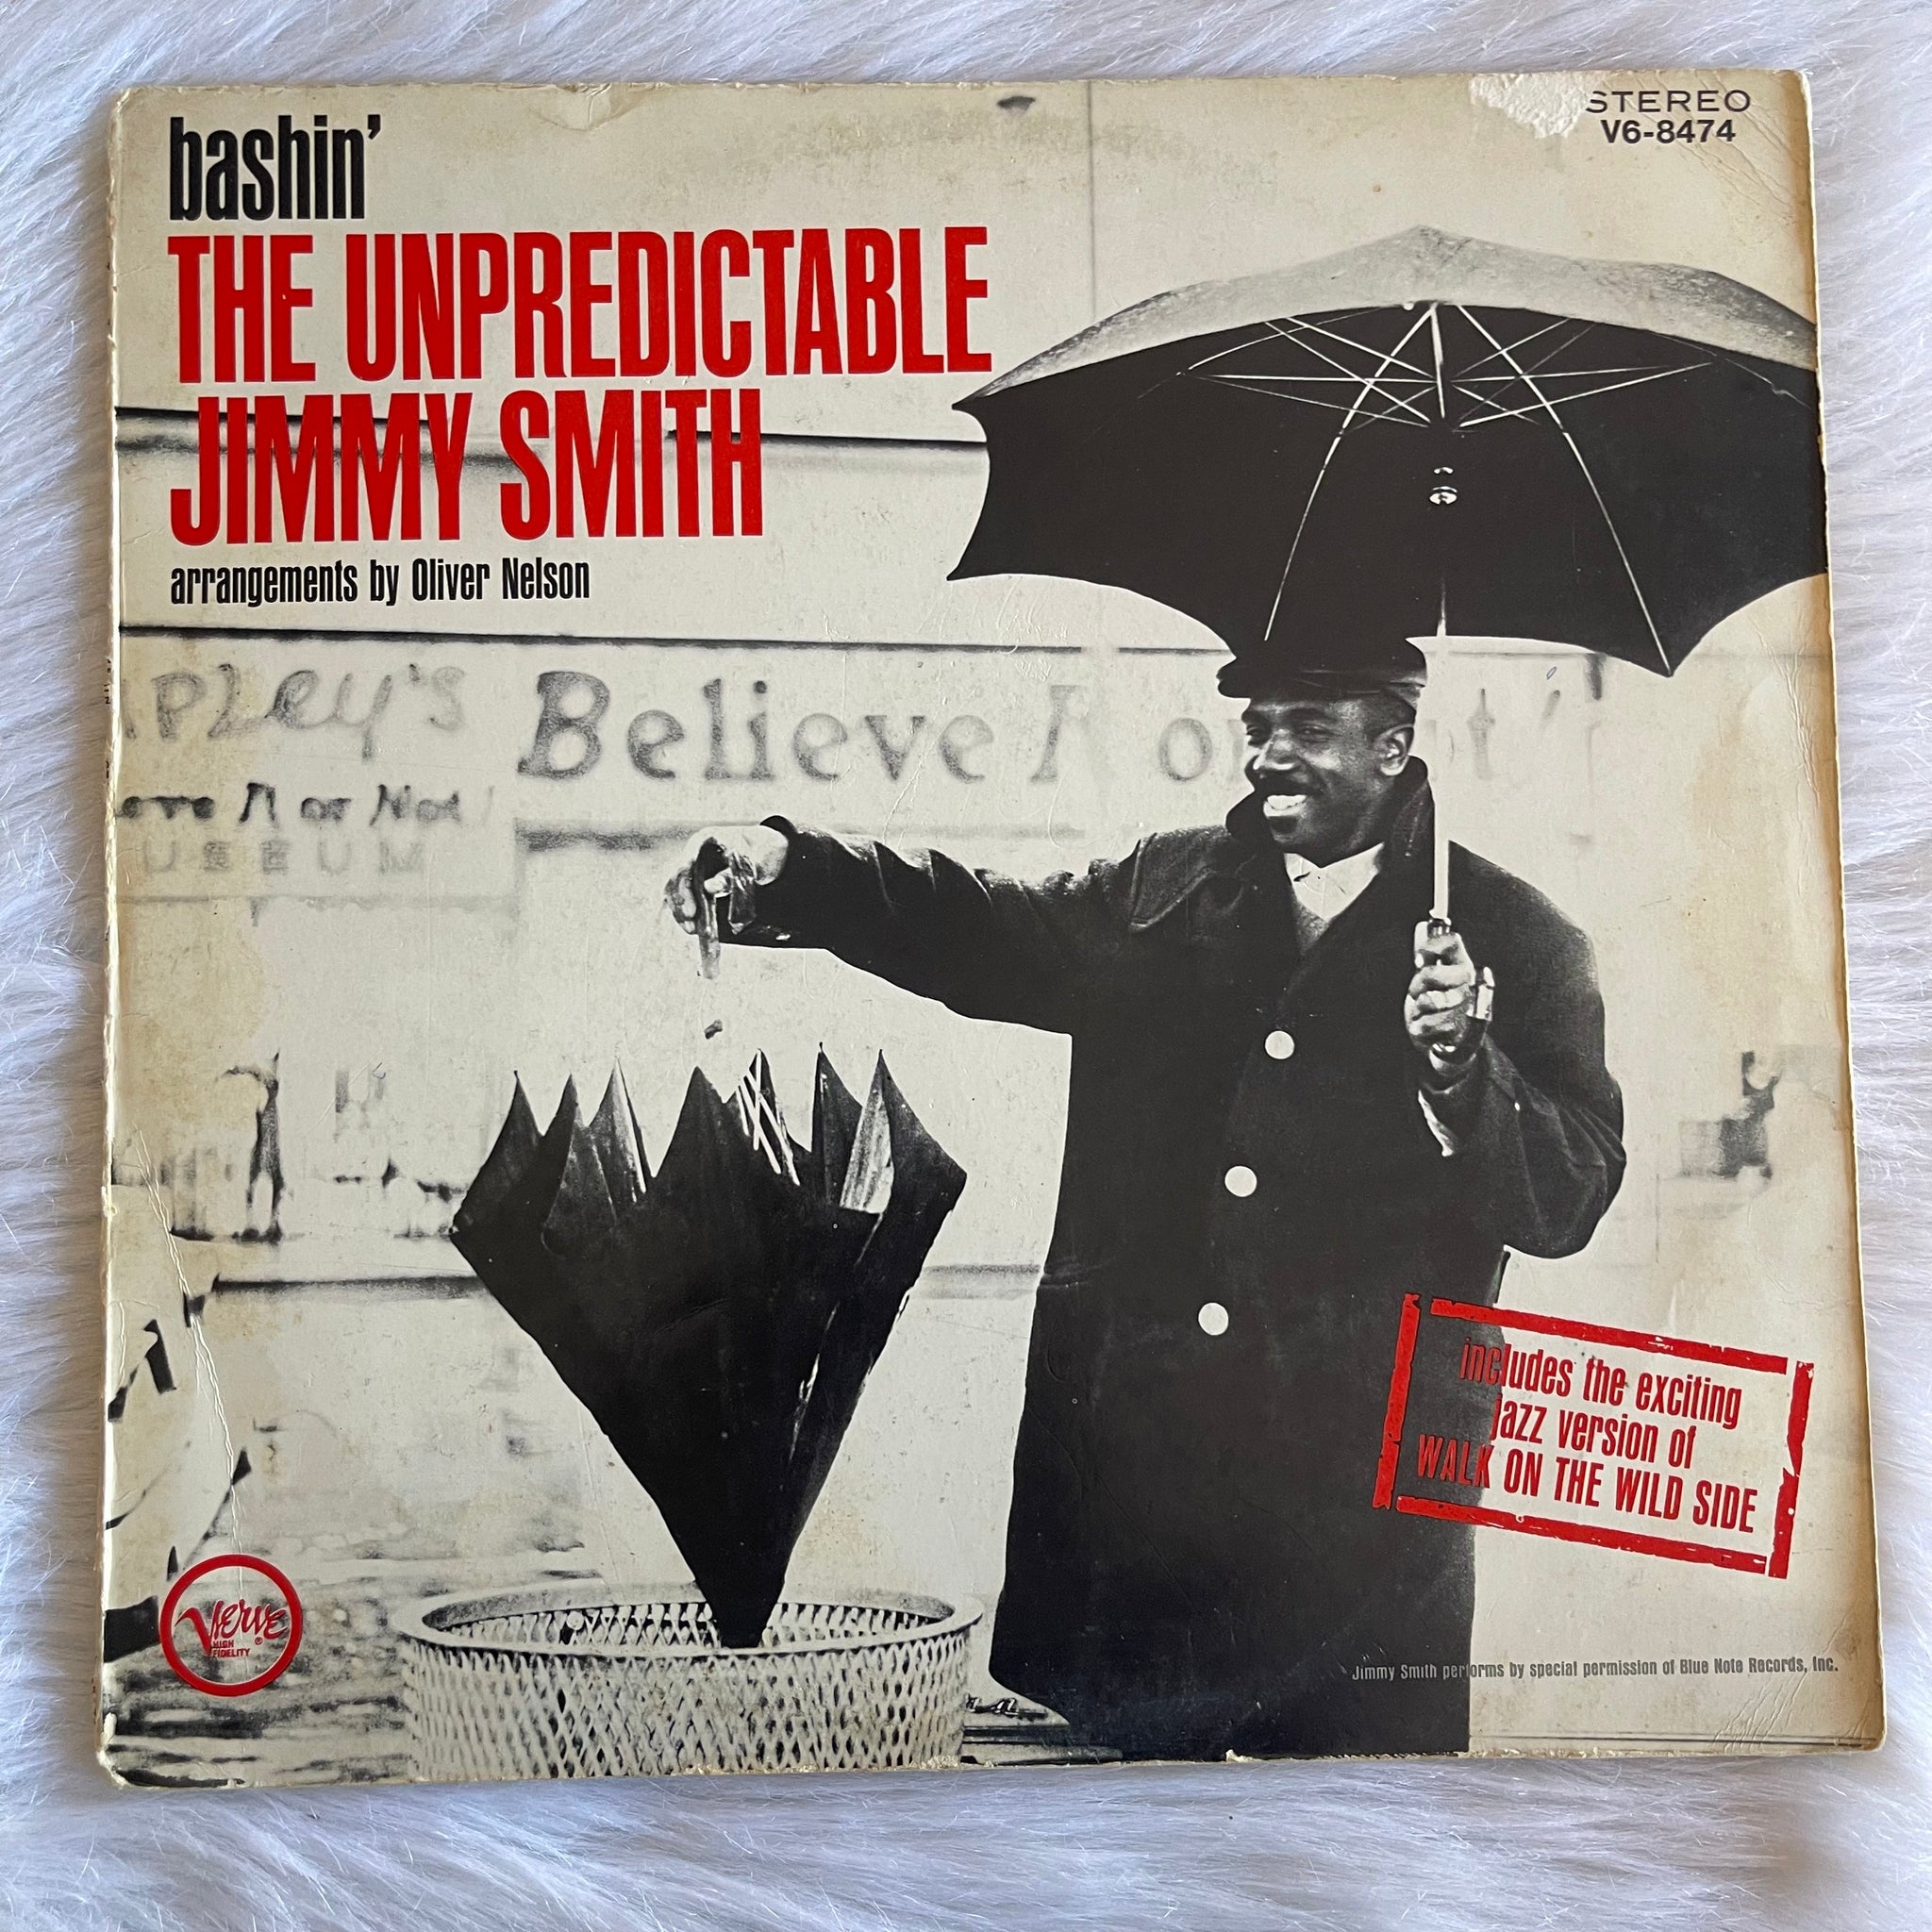 Jimmy Smith-Bashin’ The Unpredictable Jimmy Smith